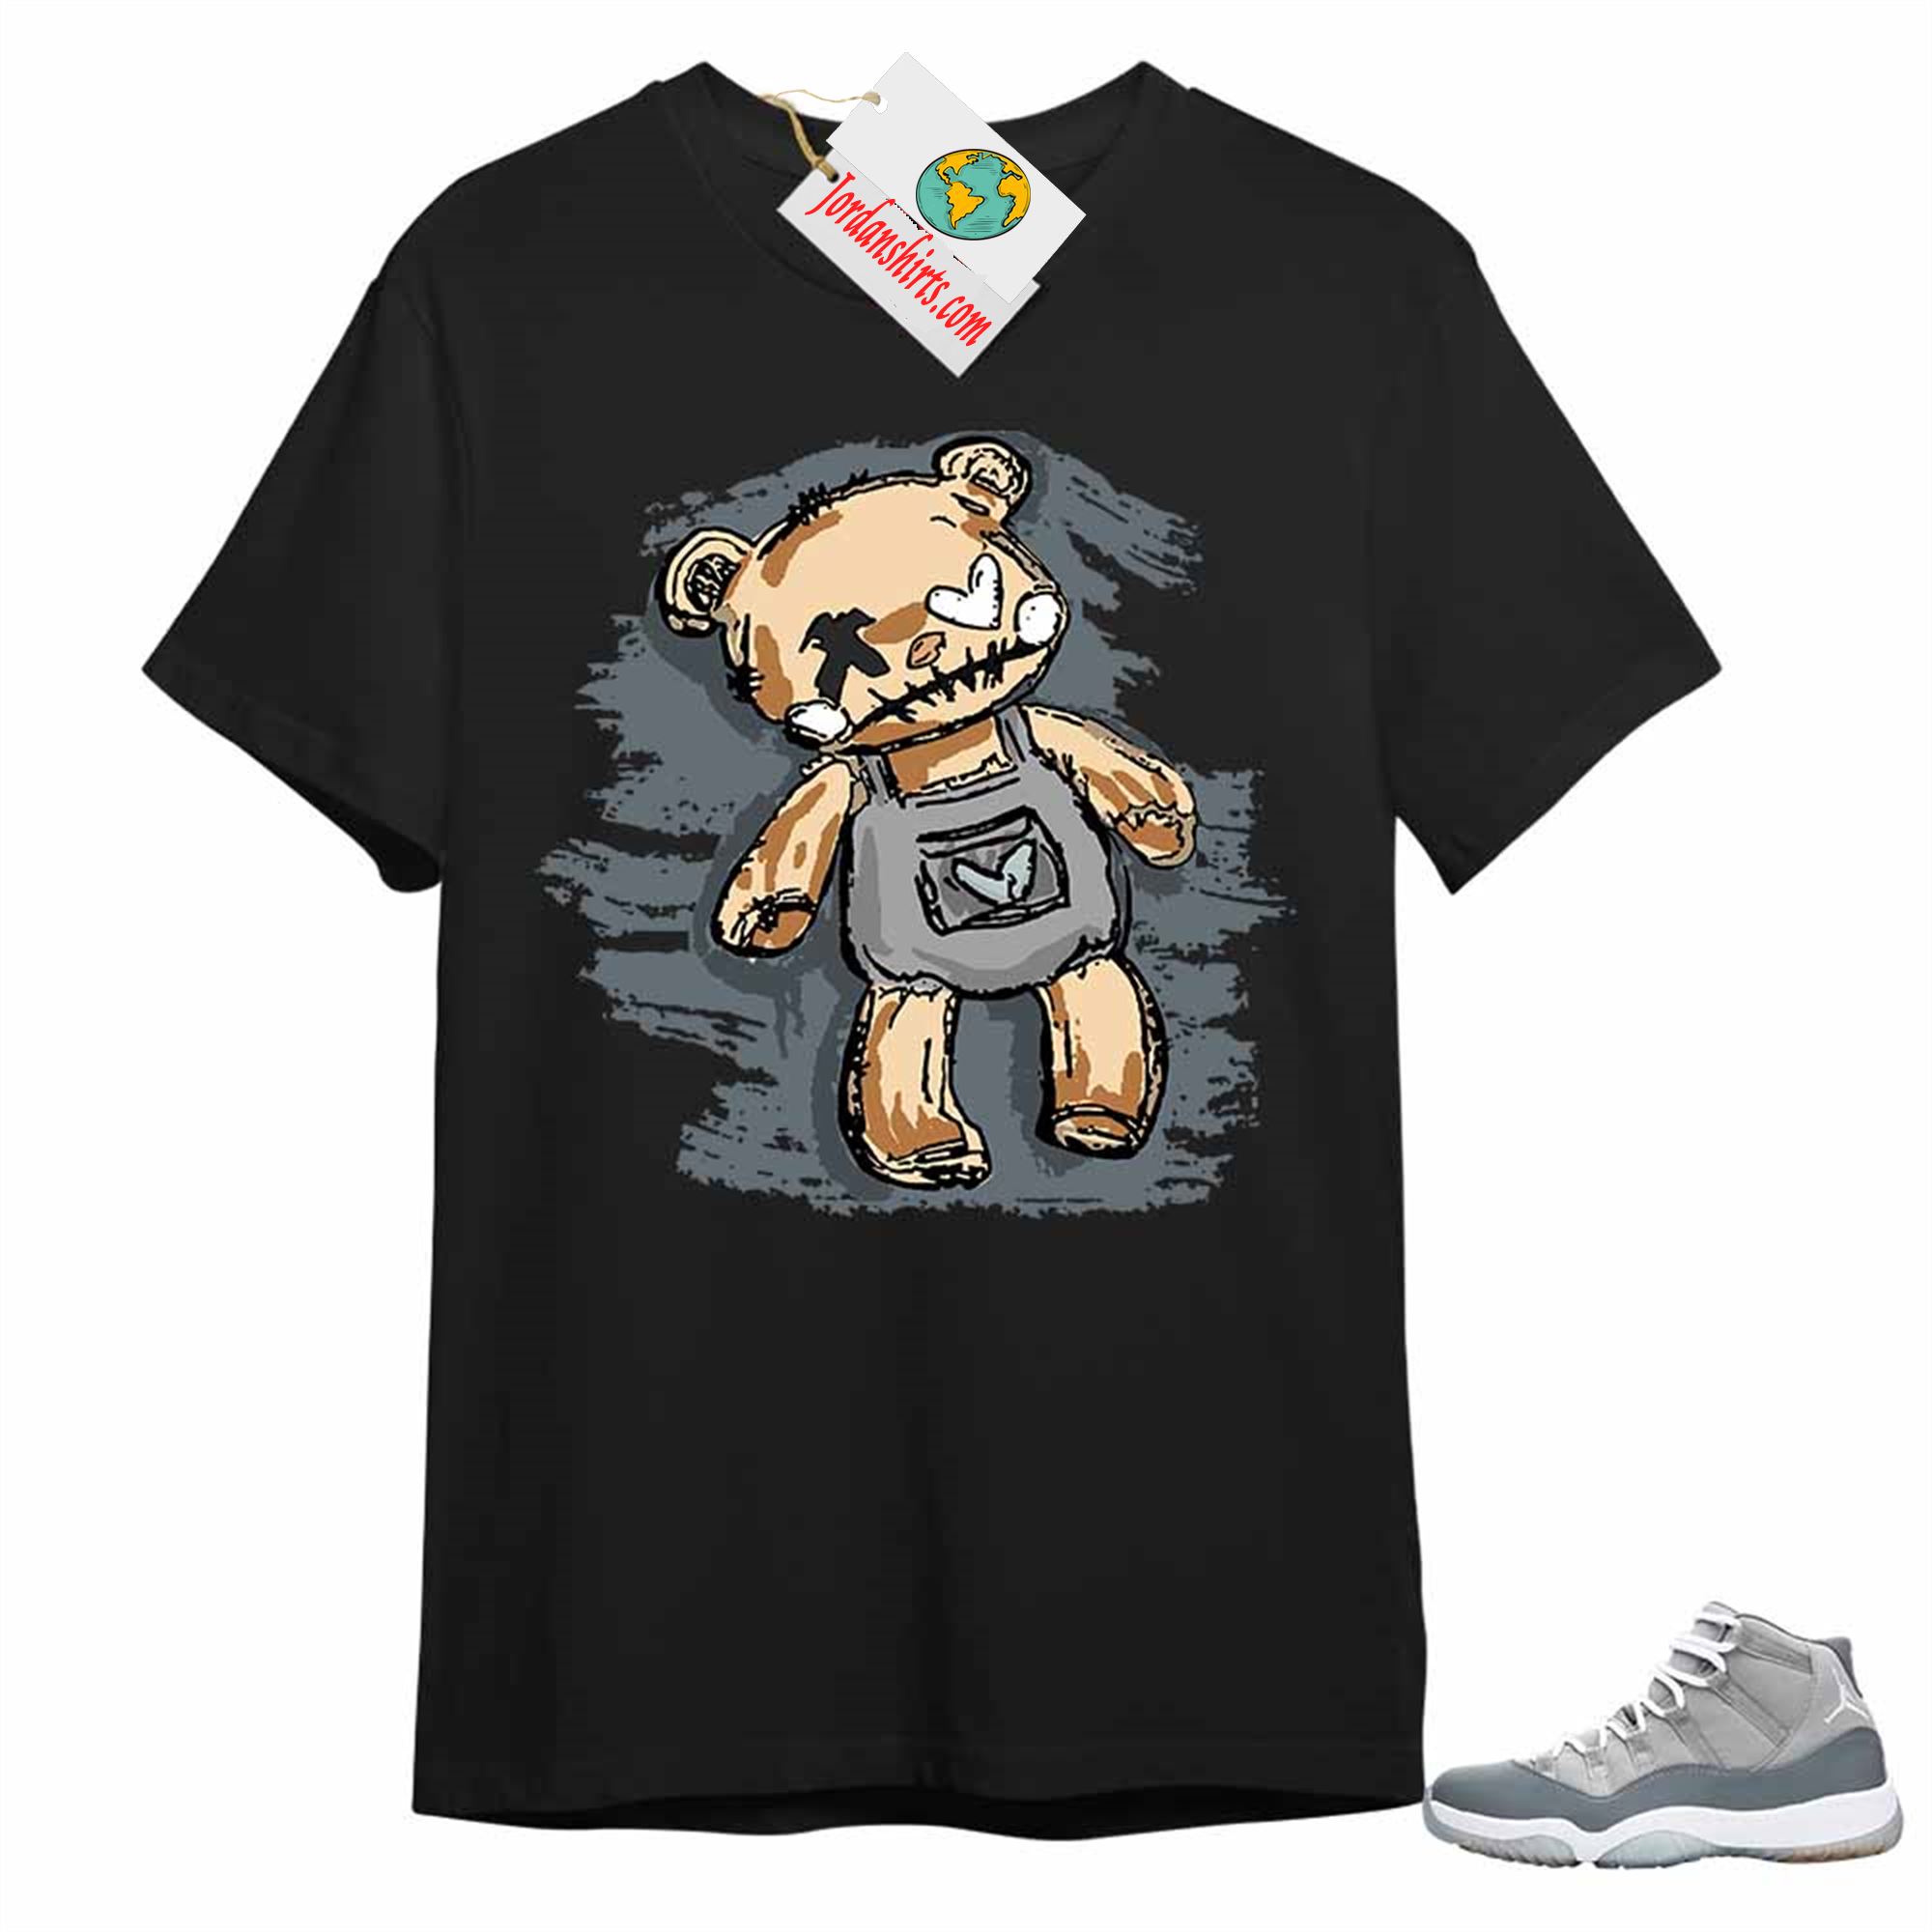 Jordan 11 Shirt, Teddy Bear Broken Heart Black Air Jordan 11 Cool Grey 11s Plus Size Up To 5xl